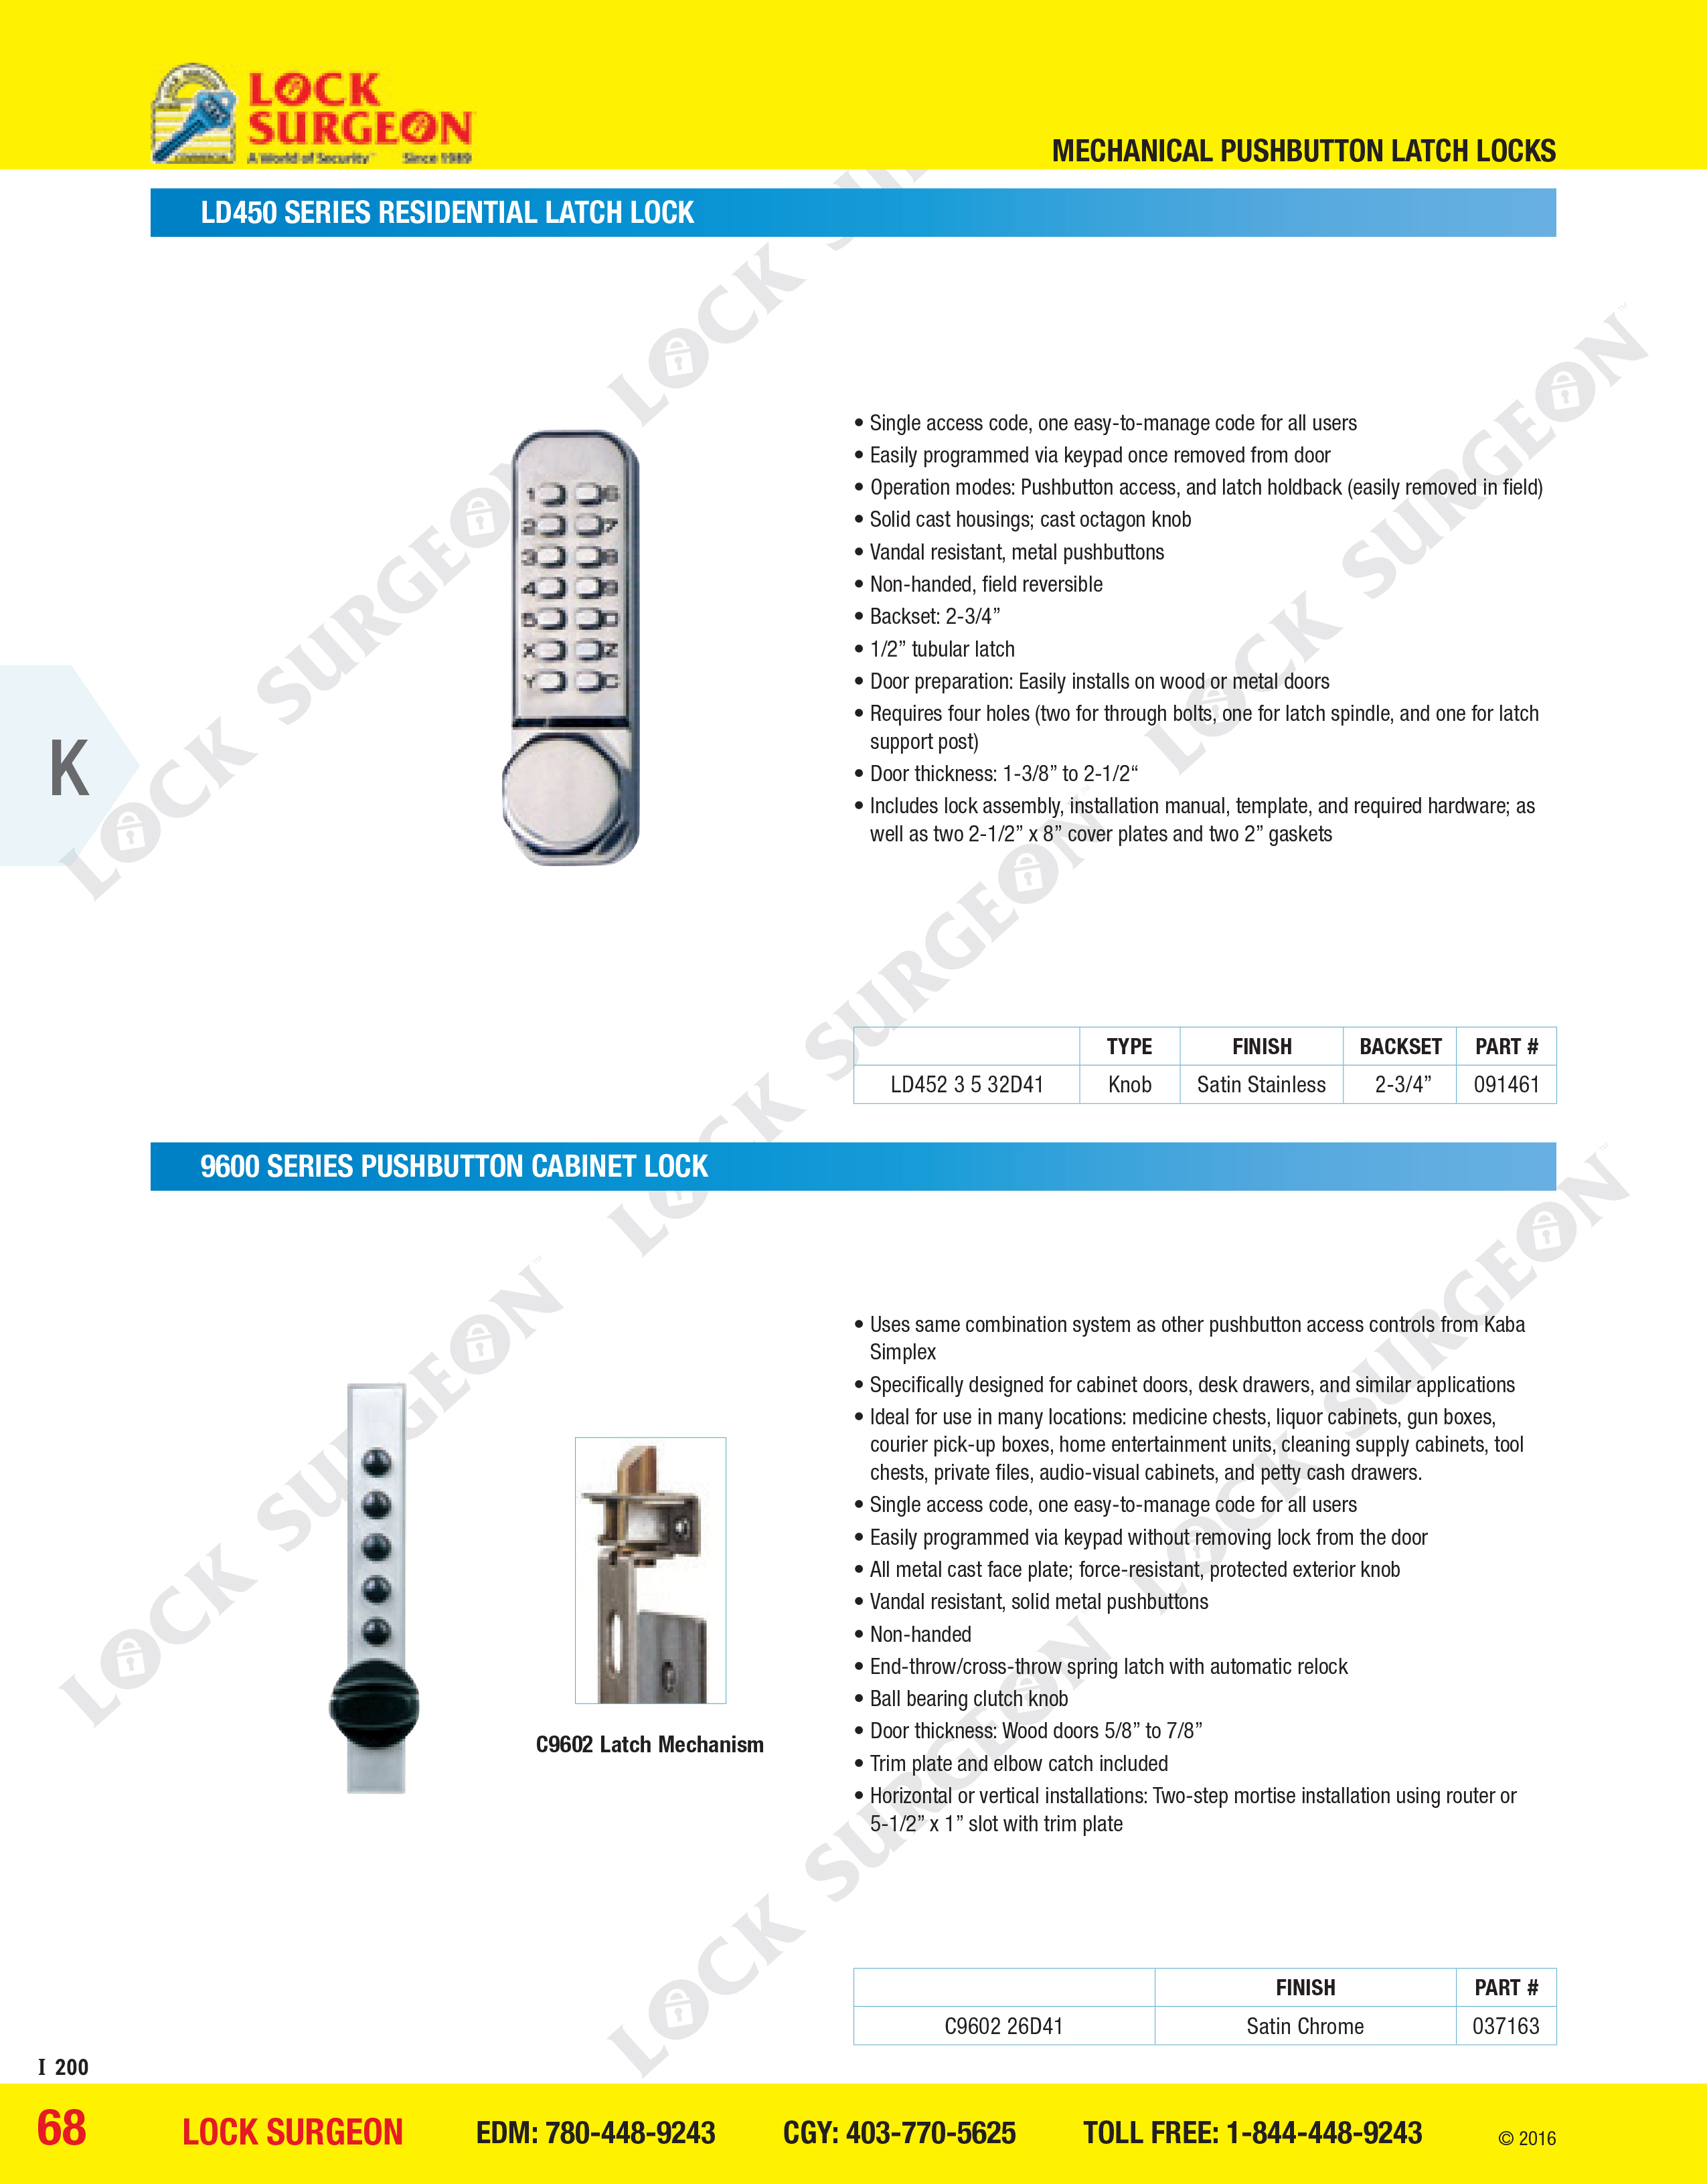 Acheson mini push-button entry push-button cabinet locks and digital cabinet entries.